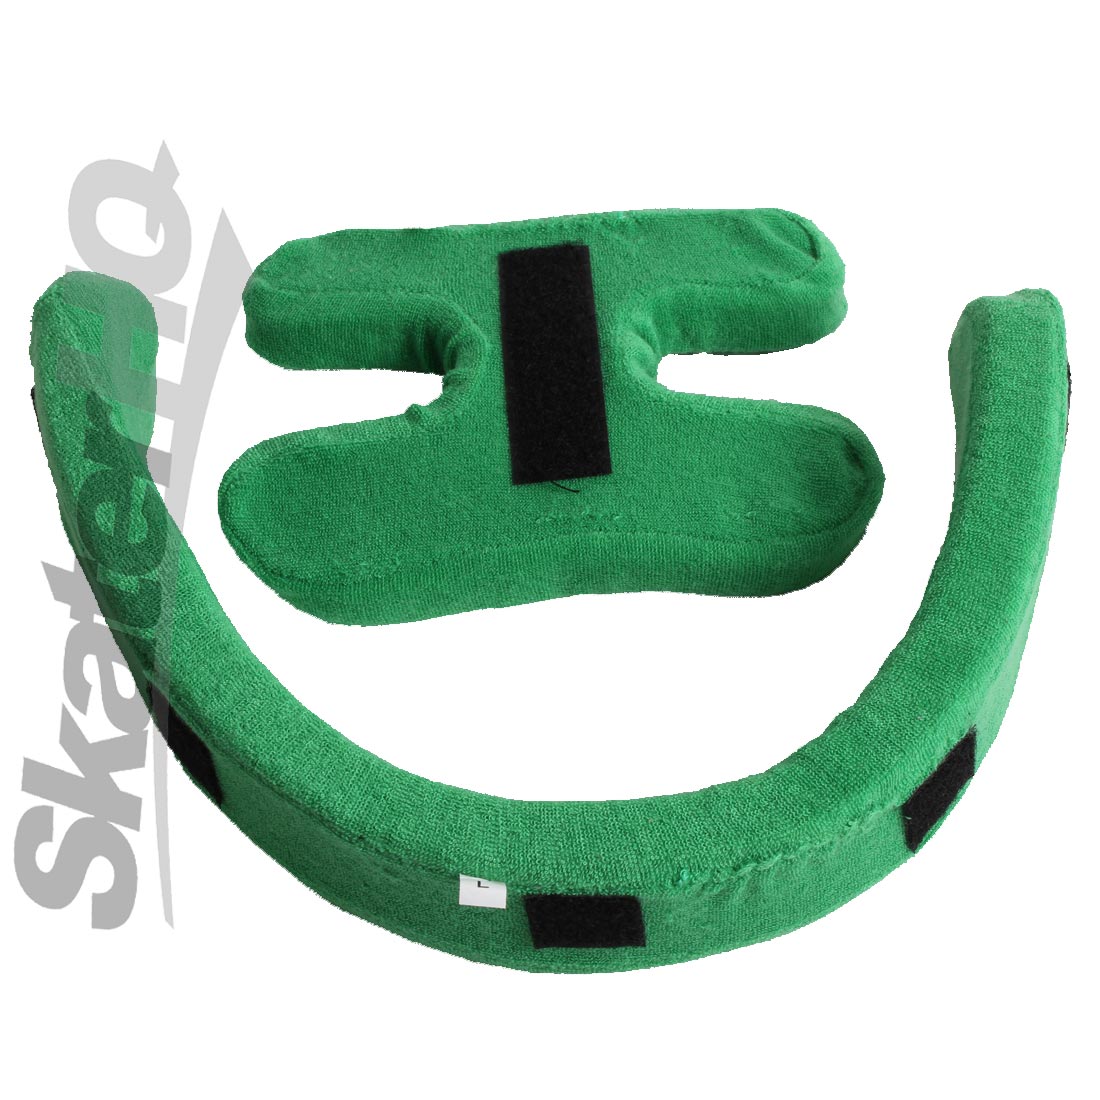 Triple 8 Sweatsaver Liner Large - Green Helmet liners